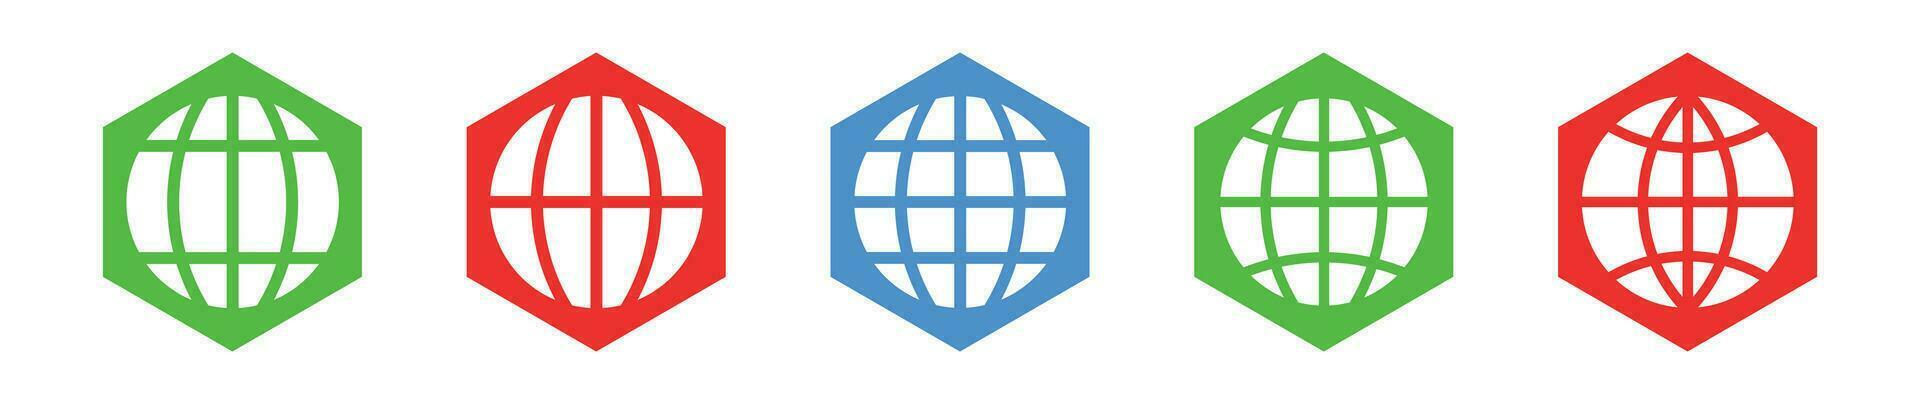 Internet globe symbol colorful button set. vector